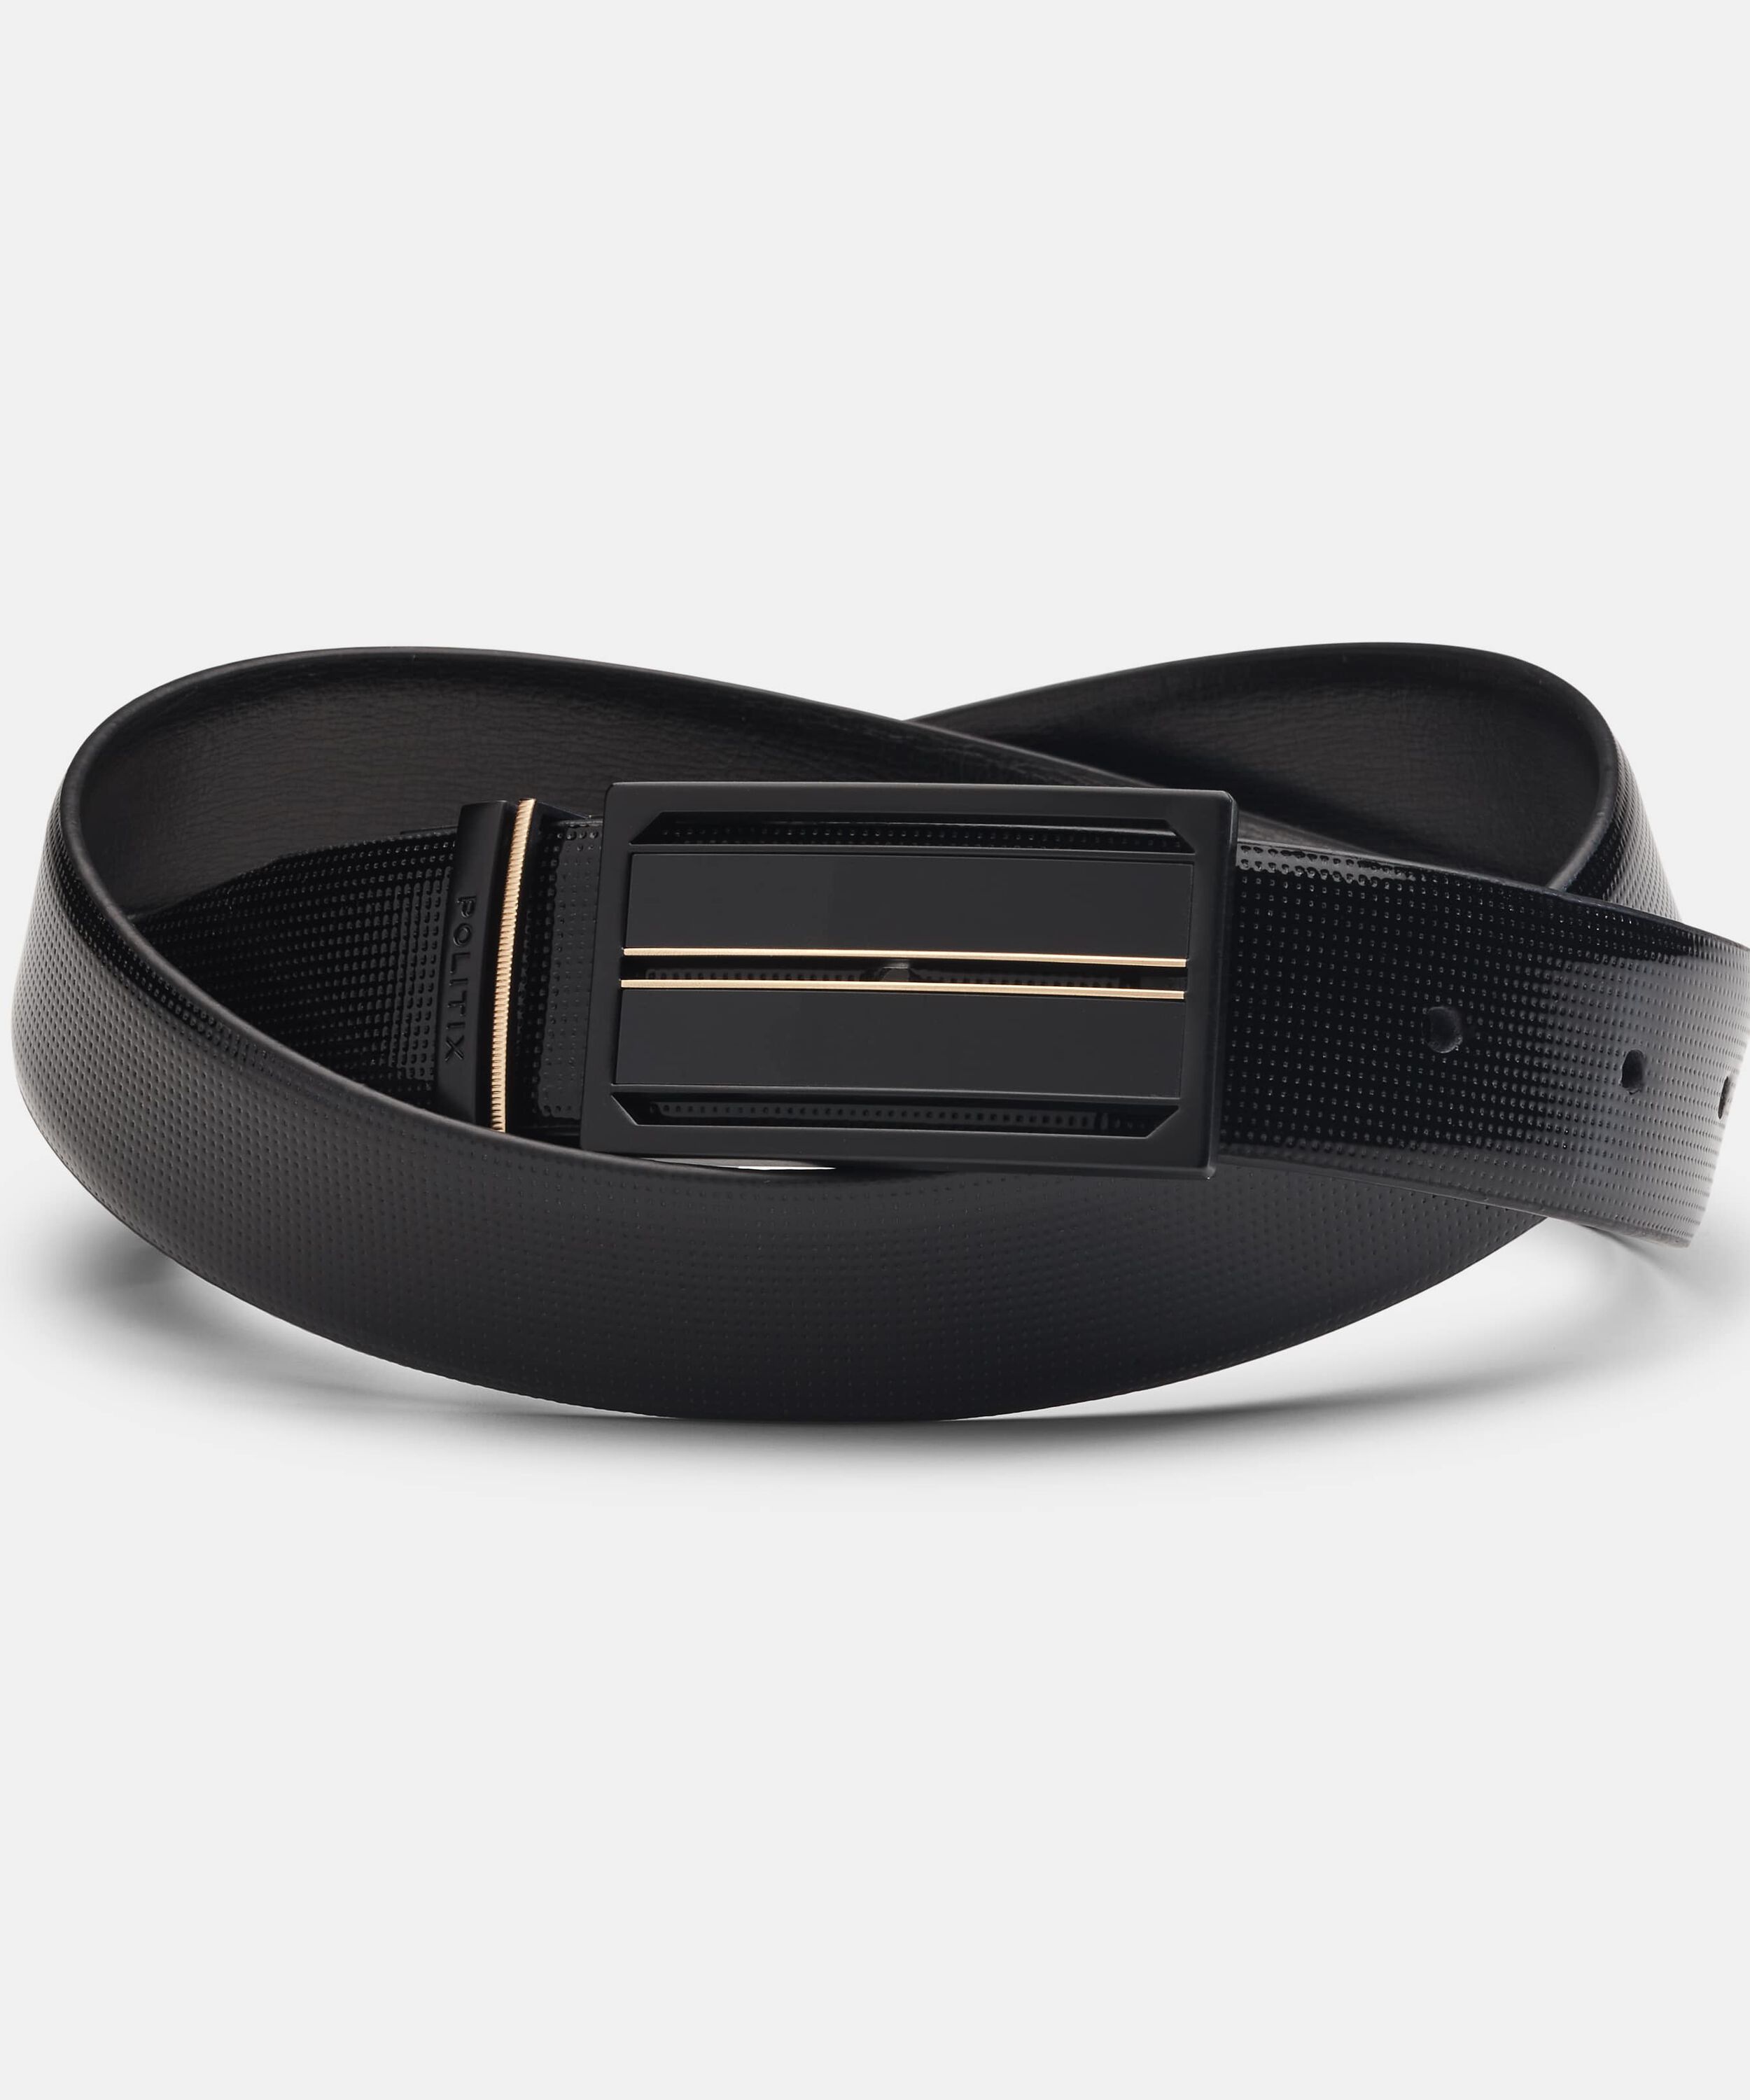 Patent Leather Dress Belt with Sheild Buckle - Black/Black